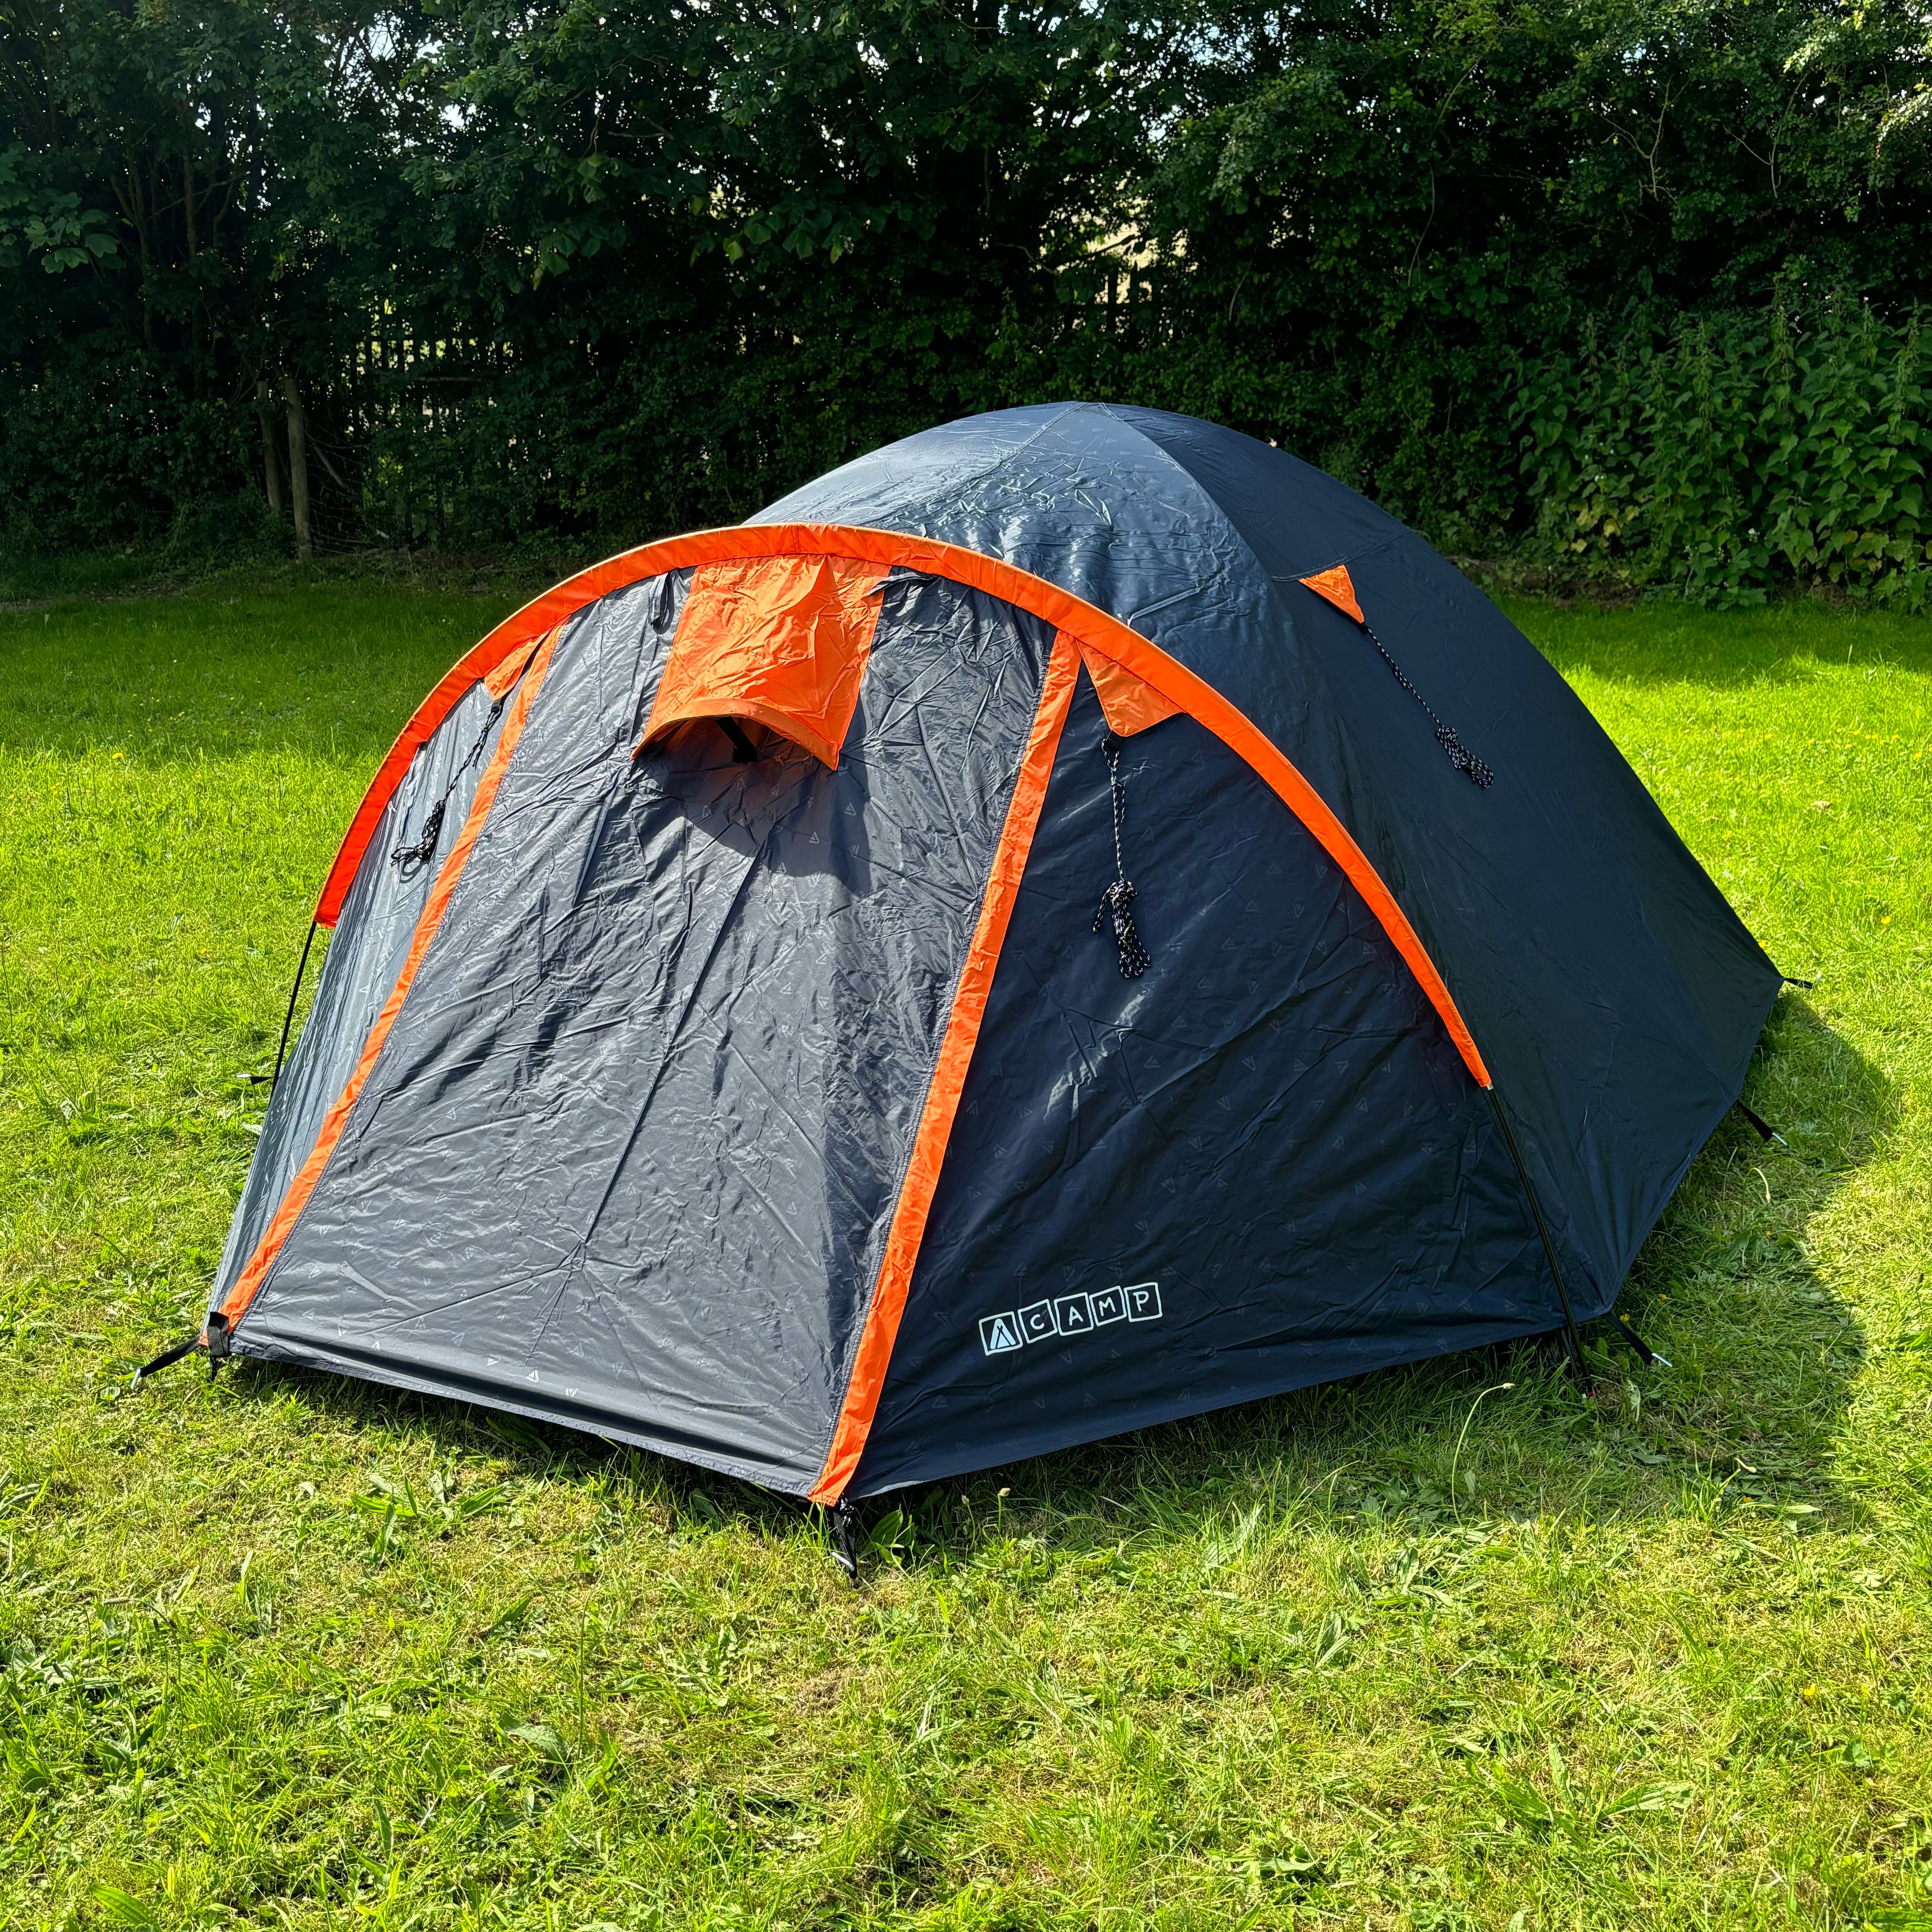 Tambu Acamp 3-4 Person Dome Tent - Dark Blue / Orange - 55% OFF